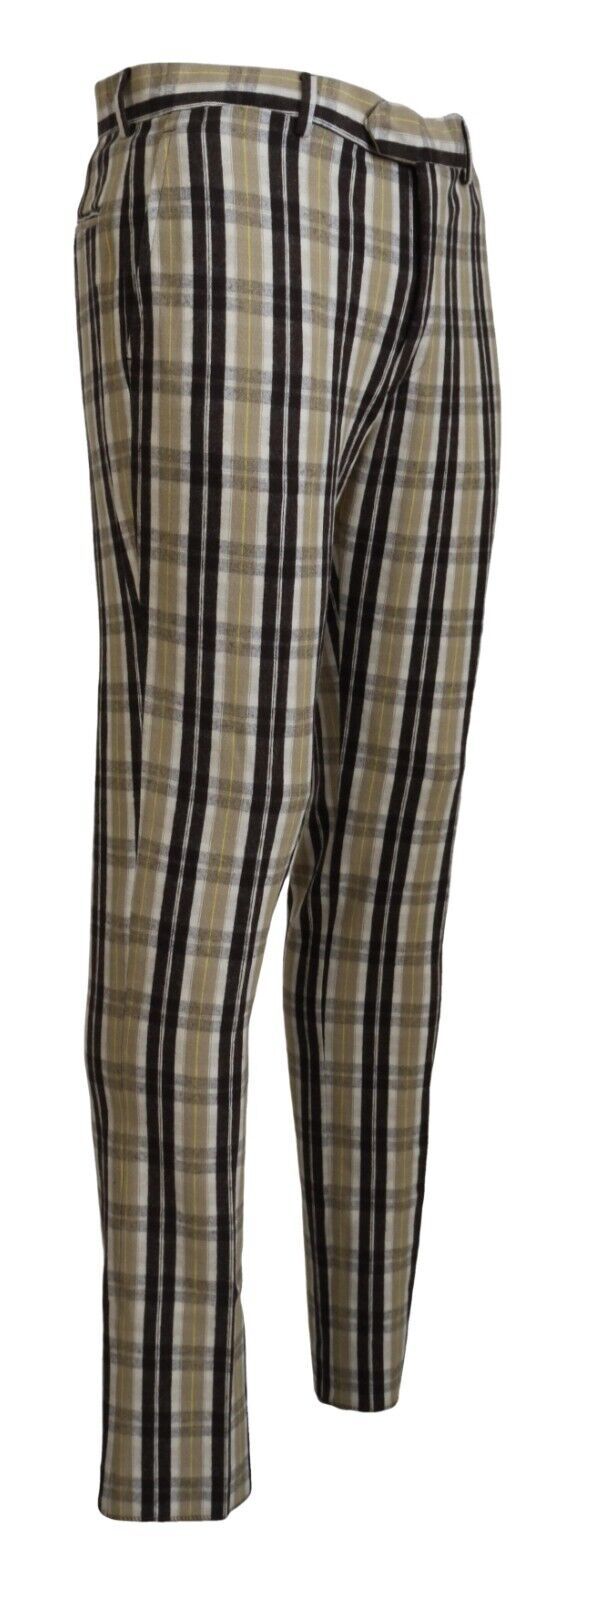 Chic Multicolor Checkered Cotton Pants